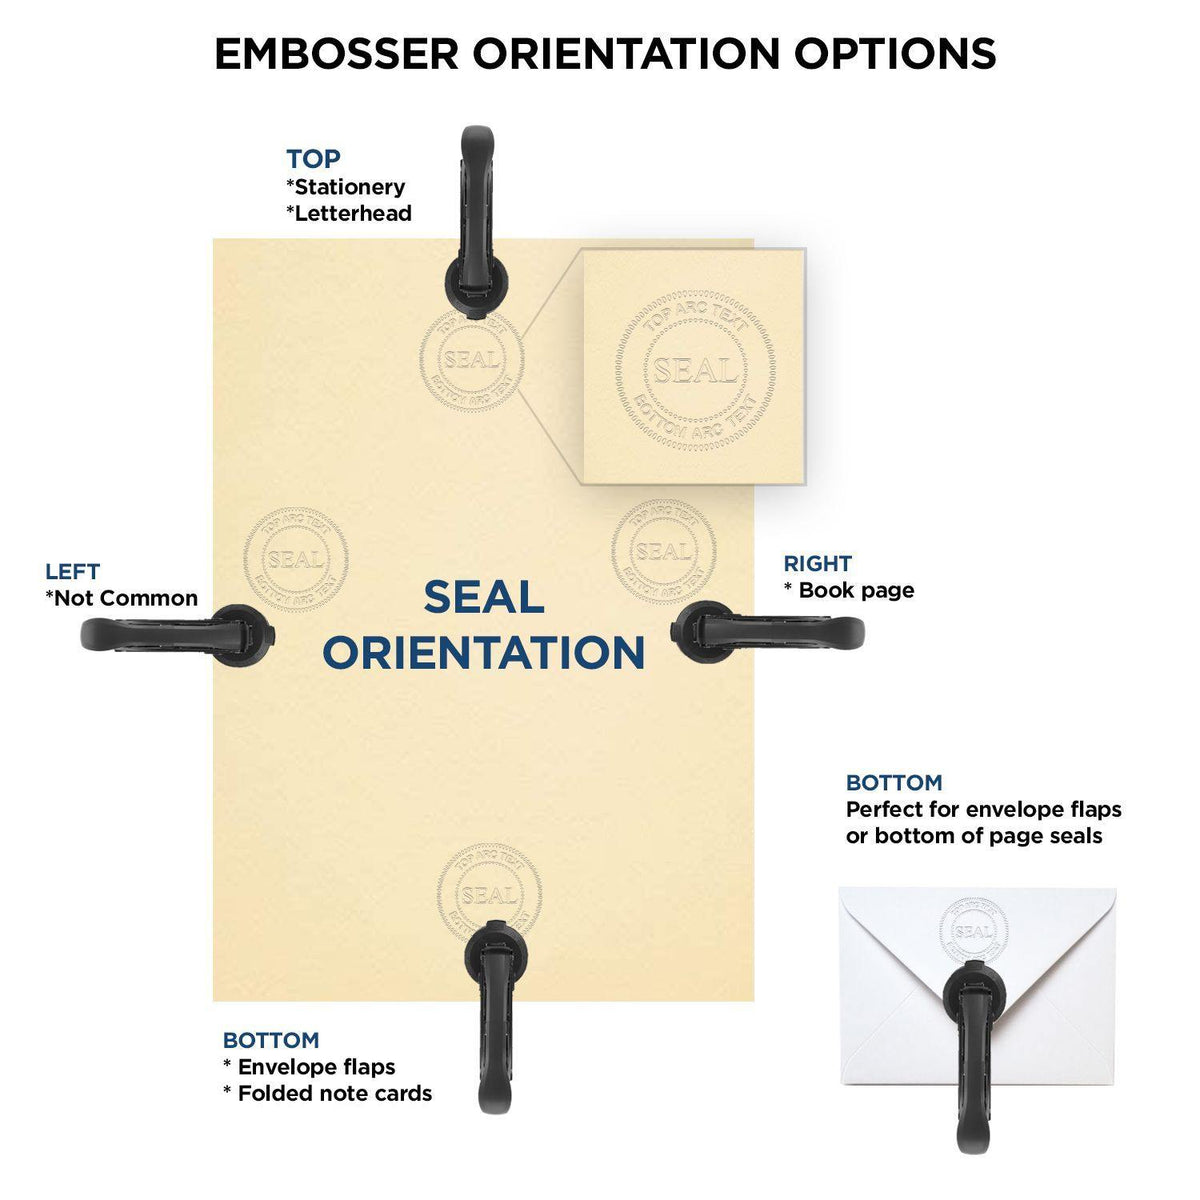 Professional Cast Iron Desk Seal Embosser - Engineer Seal Stamps - Embosser Type_Cast Iron, Embosser Type_Desk, Type of Use_Professional, Use_Heavy Duty